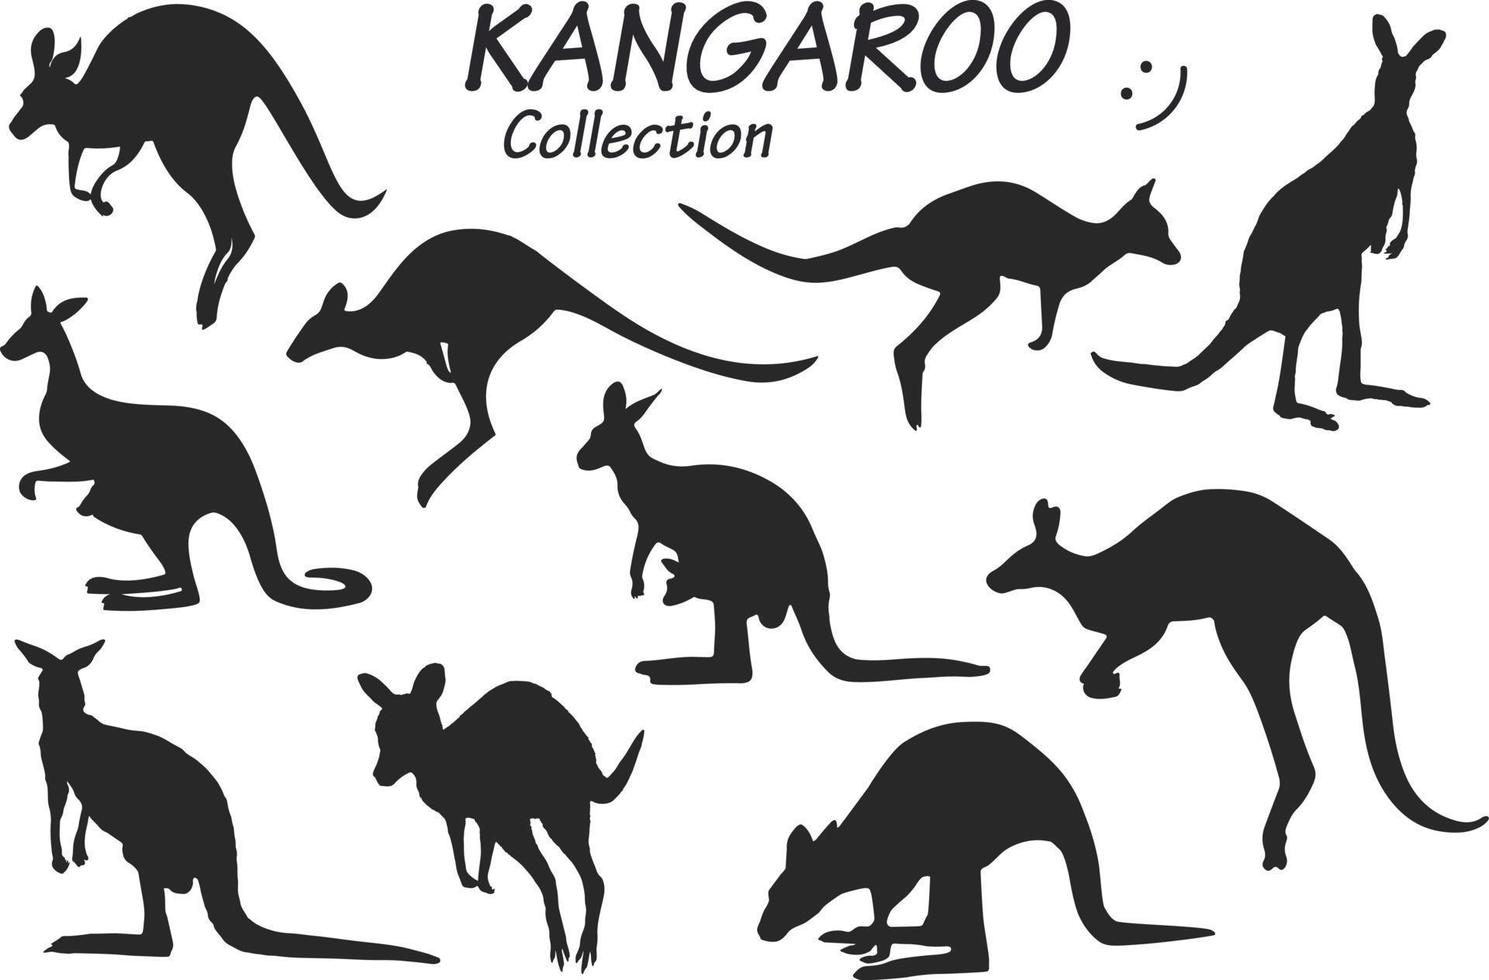 kangaroo silhouettes collection vector